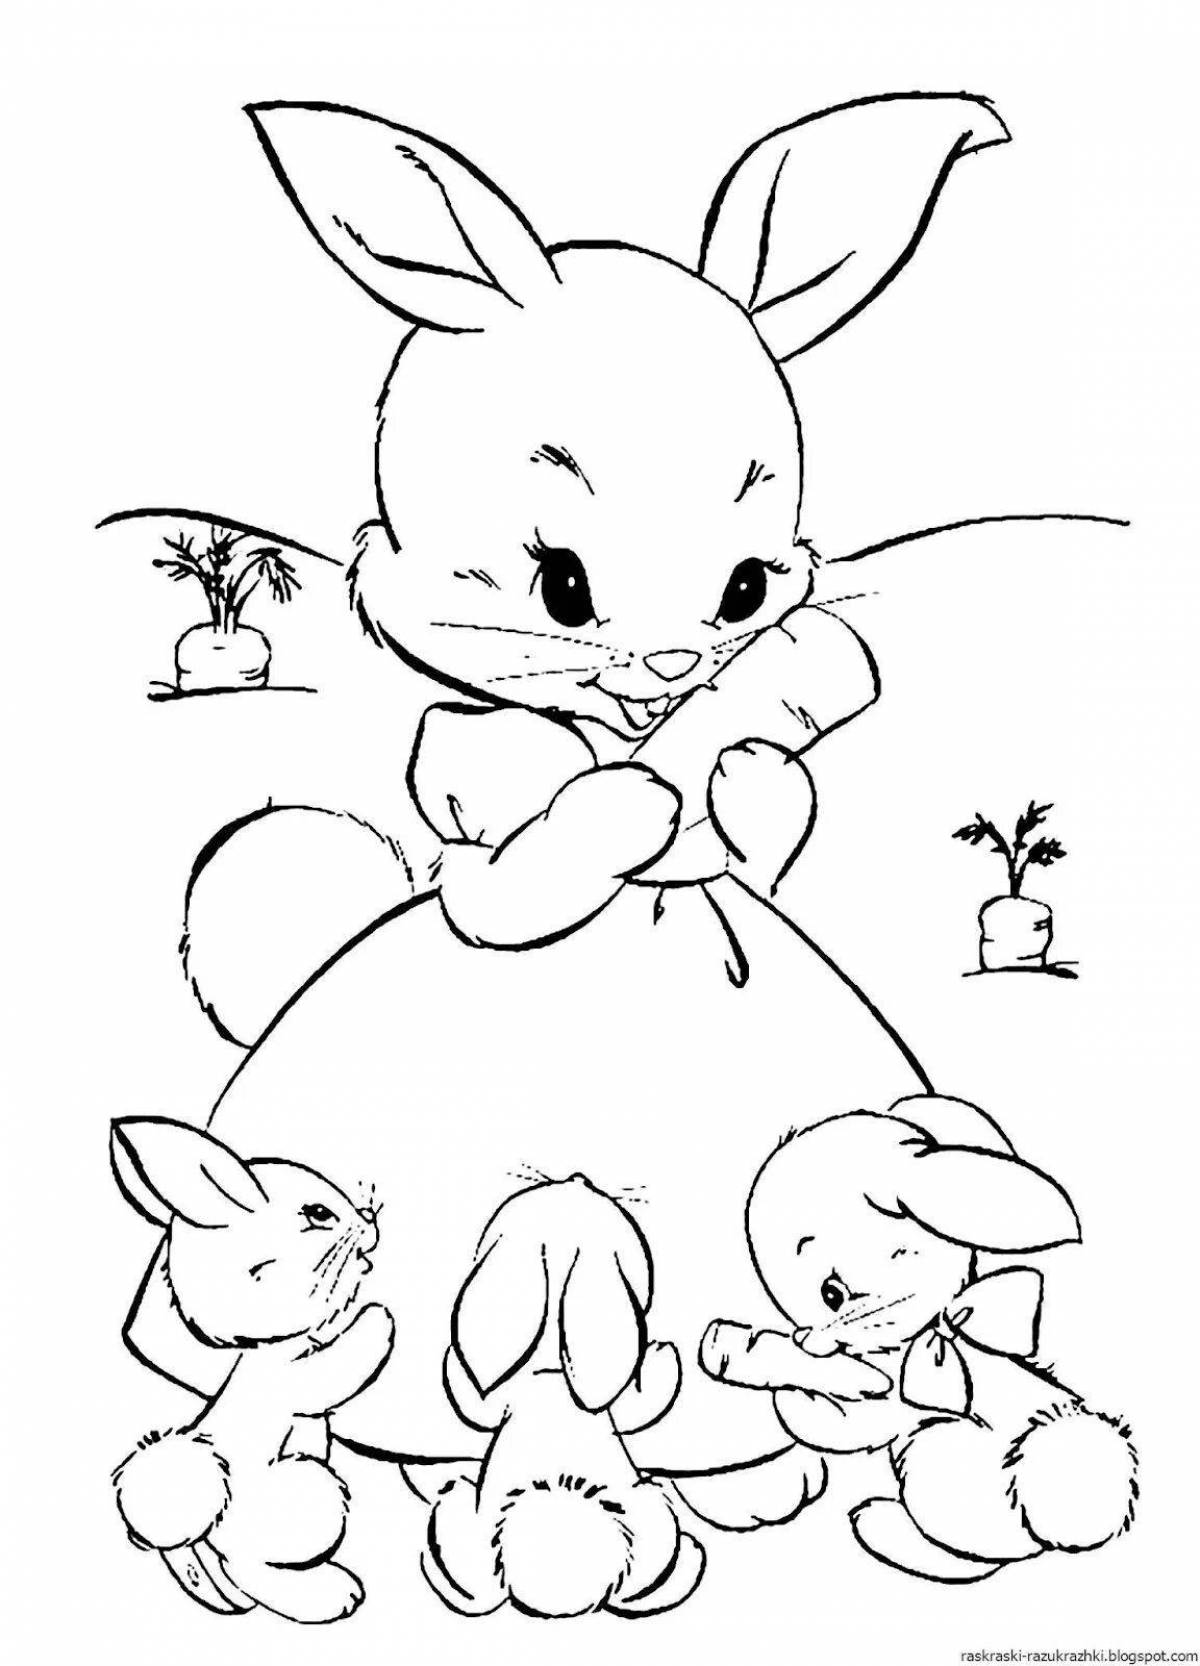 Comic coloring book rabbit man